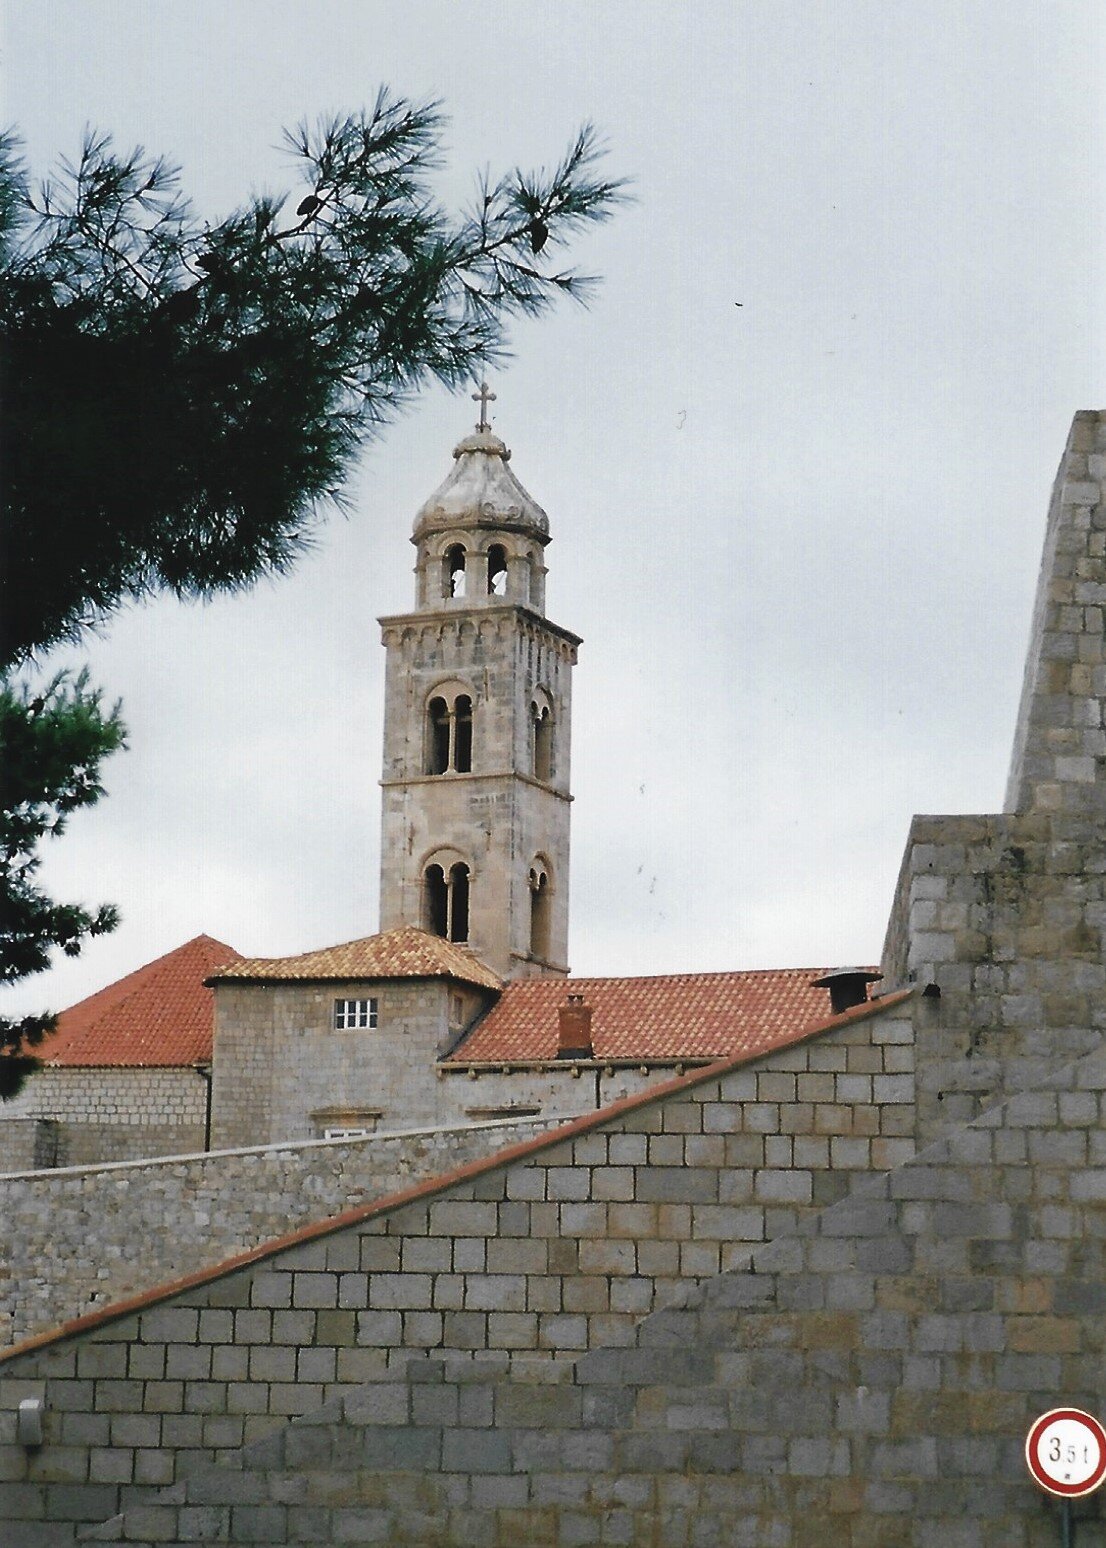 Dubrovnik Bell Tower